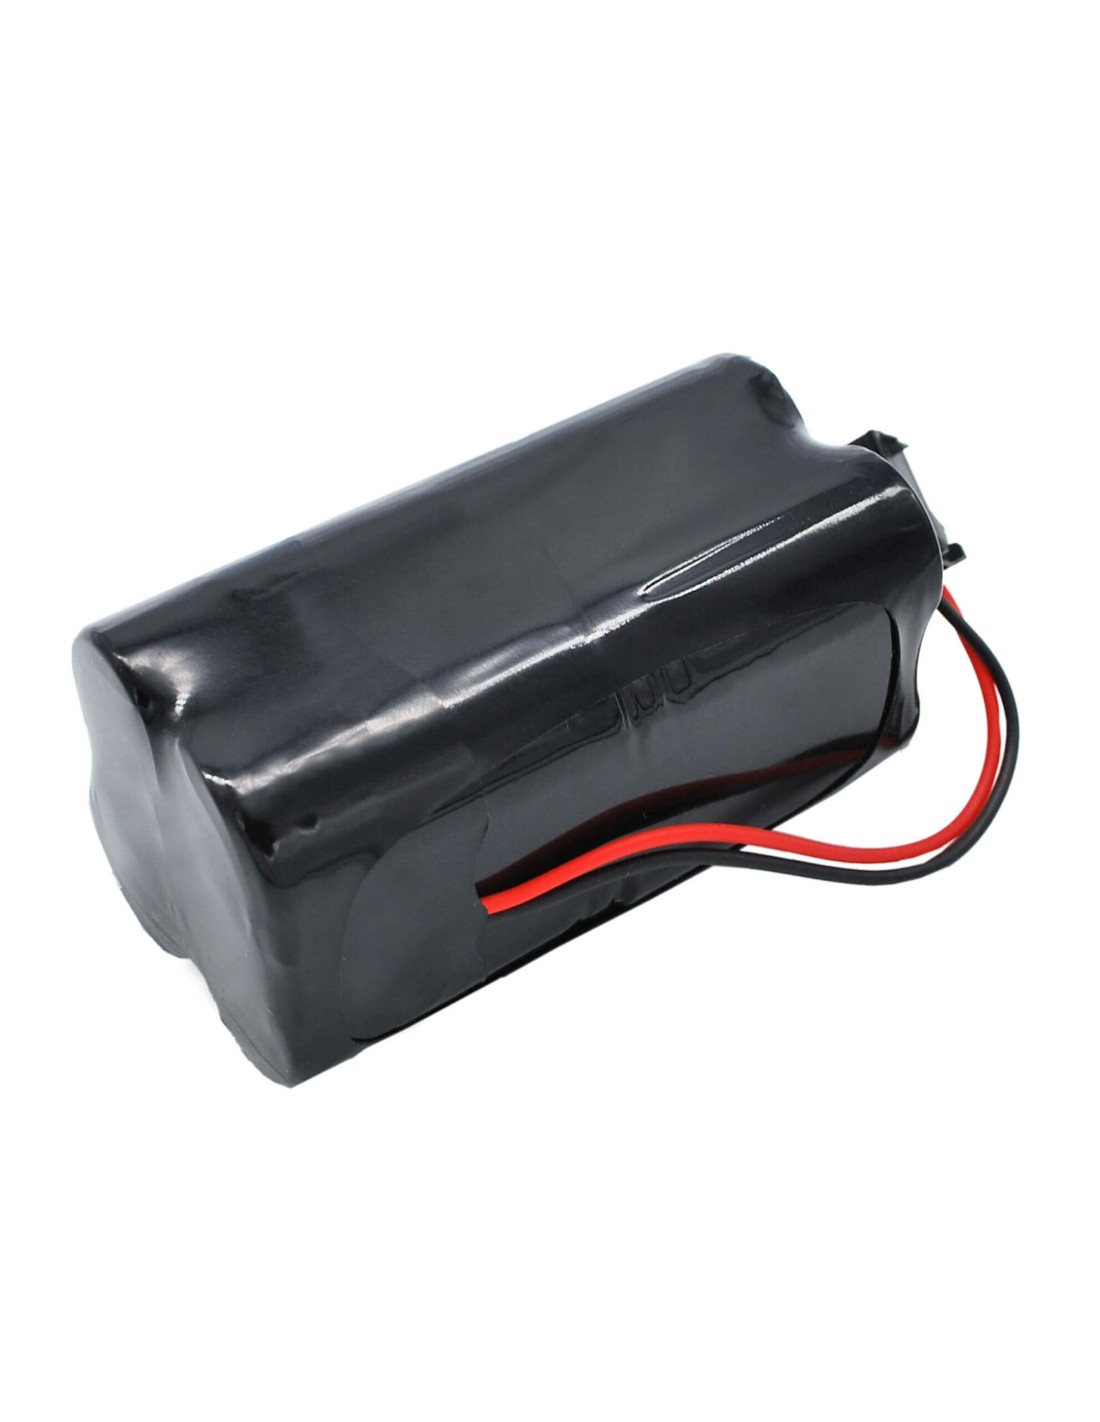 Battery for Tri-tronics 1016200 9.6V, 600mAh - 5.76Wh